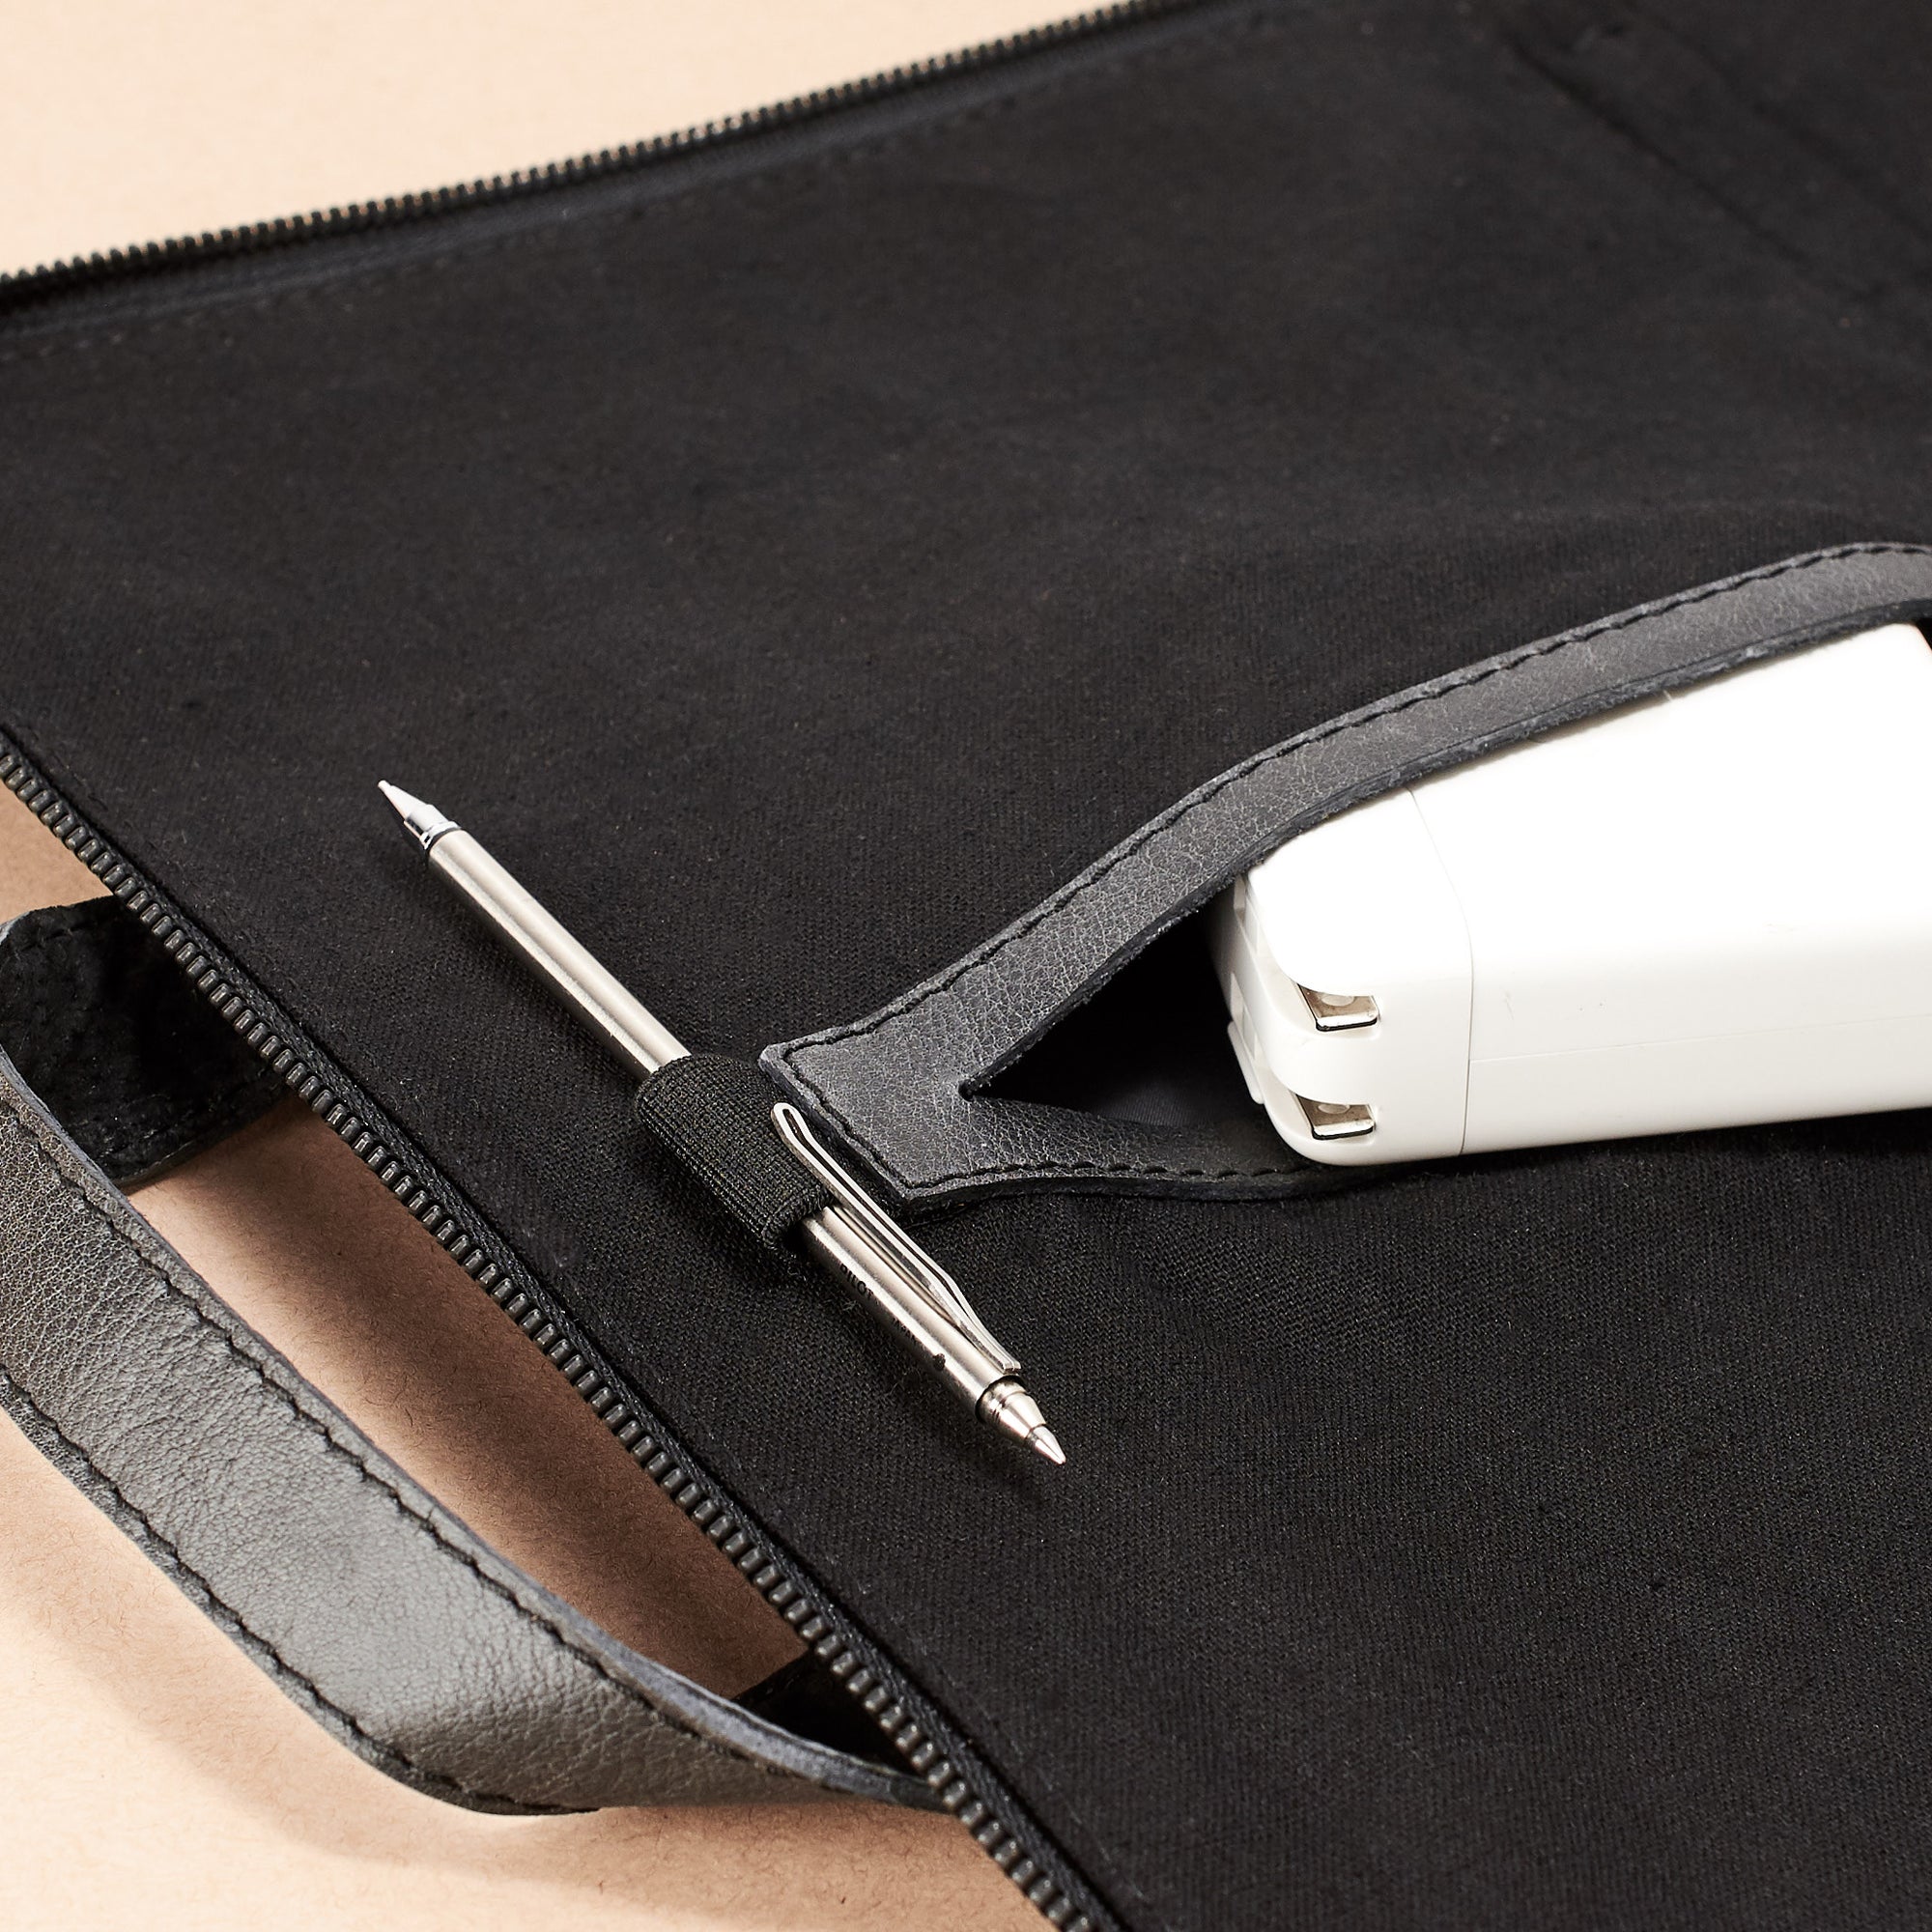 Interior pocket and pen holder. Black Laptop Portfolio. Business Document Organizer by Capra Leather